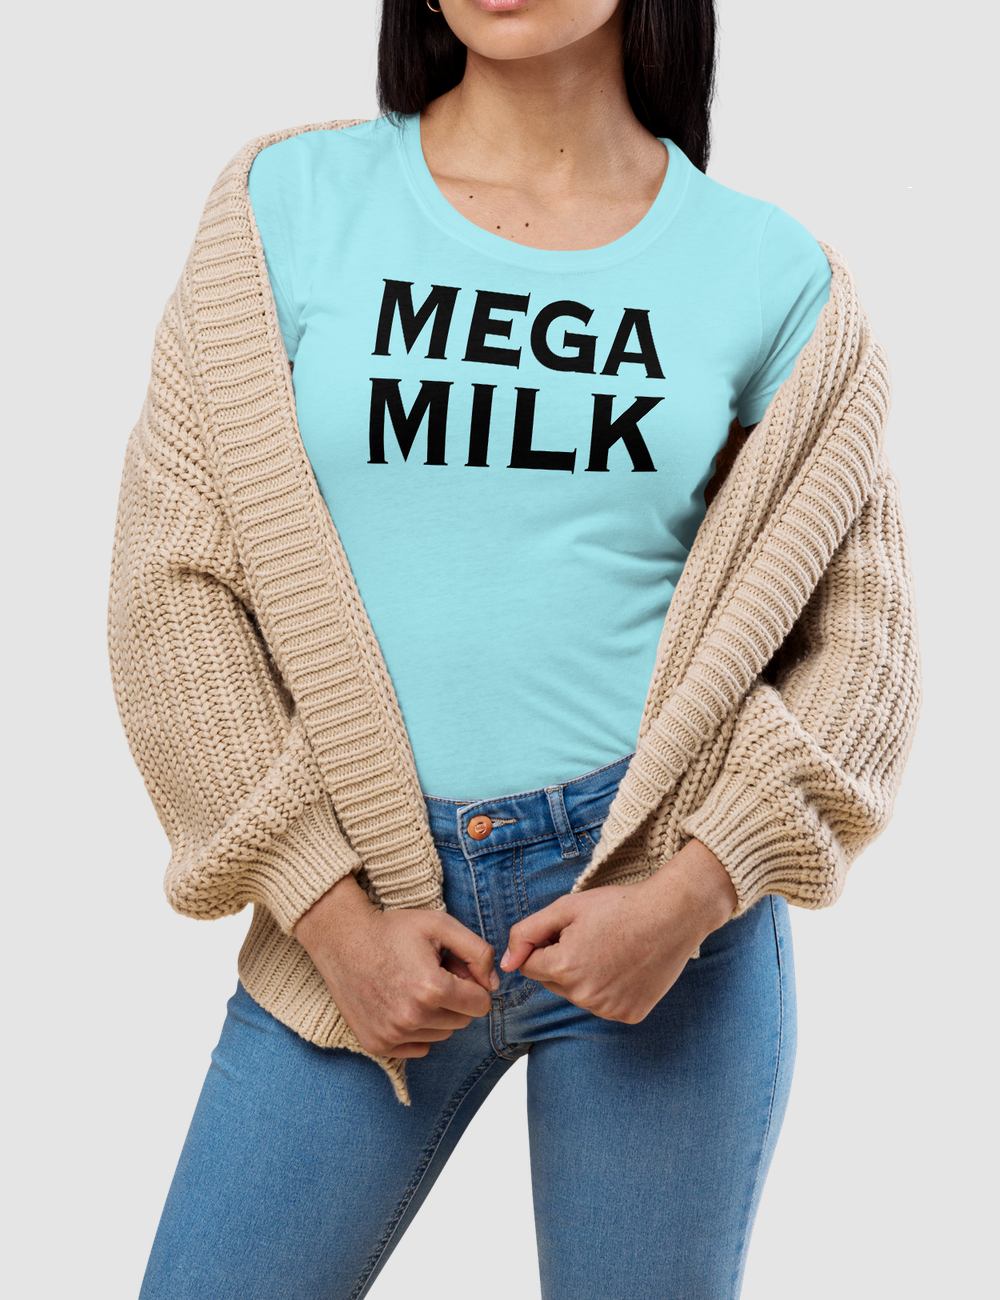 Mega Milk | Women's Fitted T-Shirt OniTakai